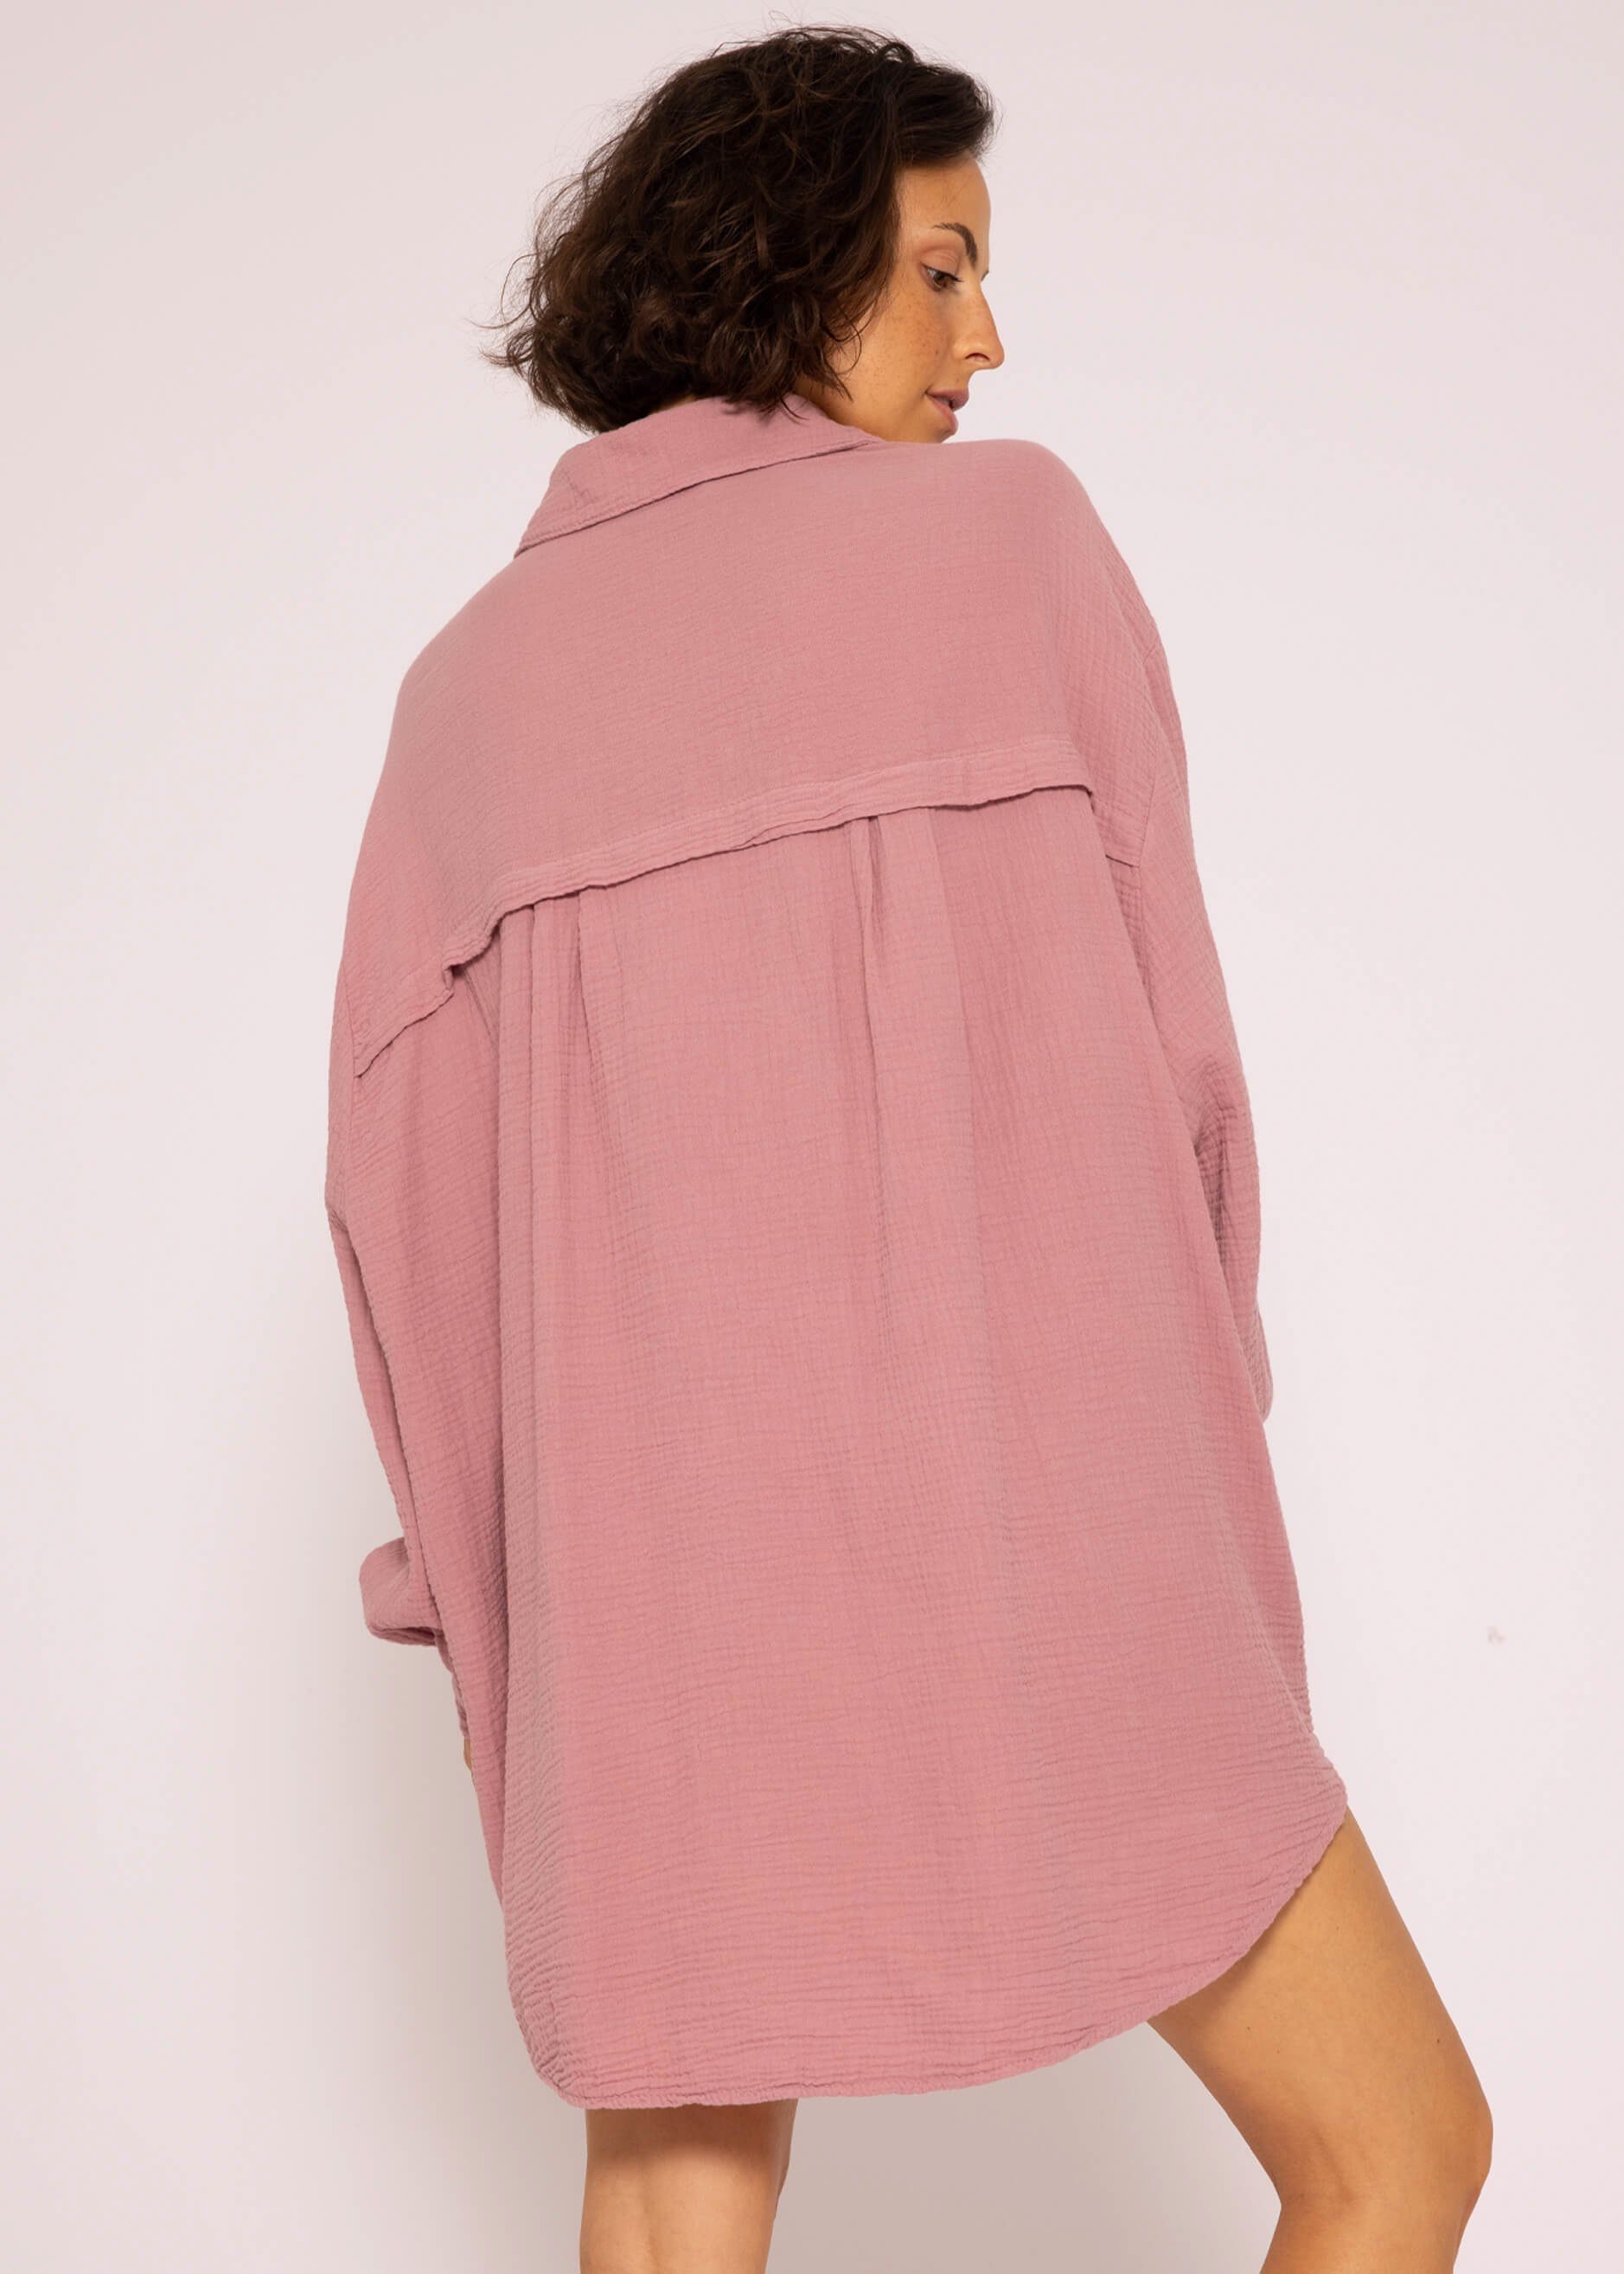 Bluse One (Gr. 36-48) Longbluse Langarm Hemdbluse Musselin aus Damen lang Altrosa Oversize V-Ausschnitt, SASSYCLASSY Size Baumwolle mit